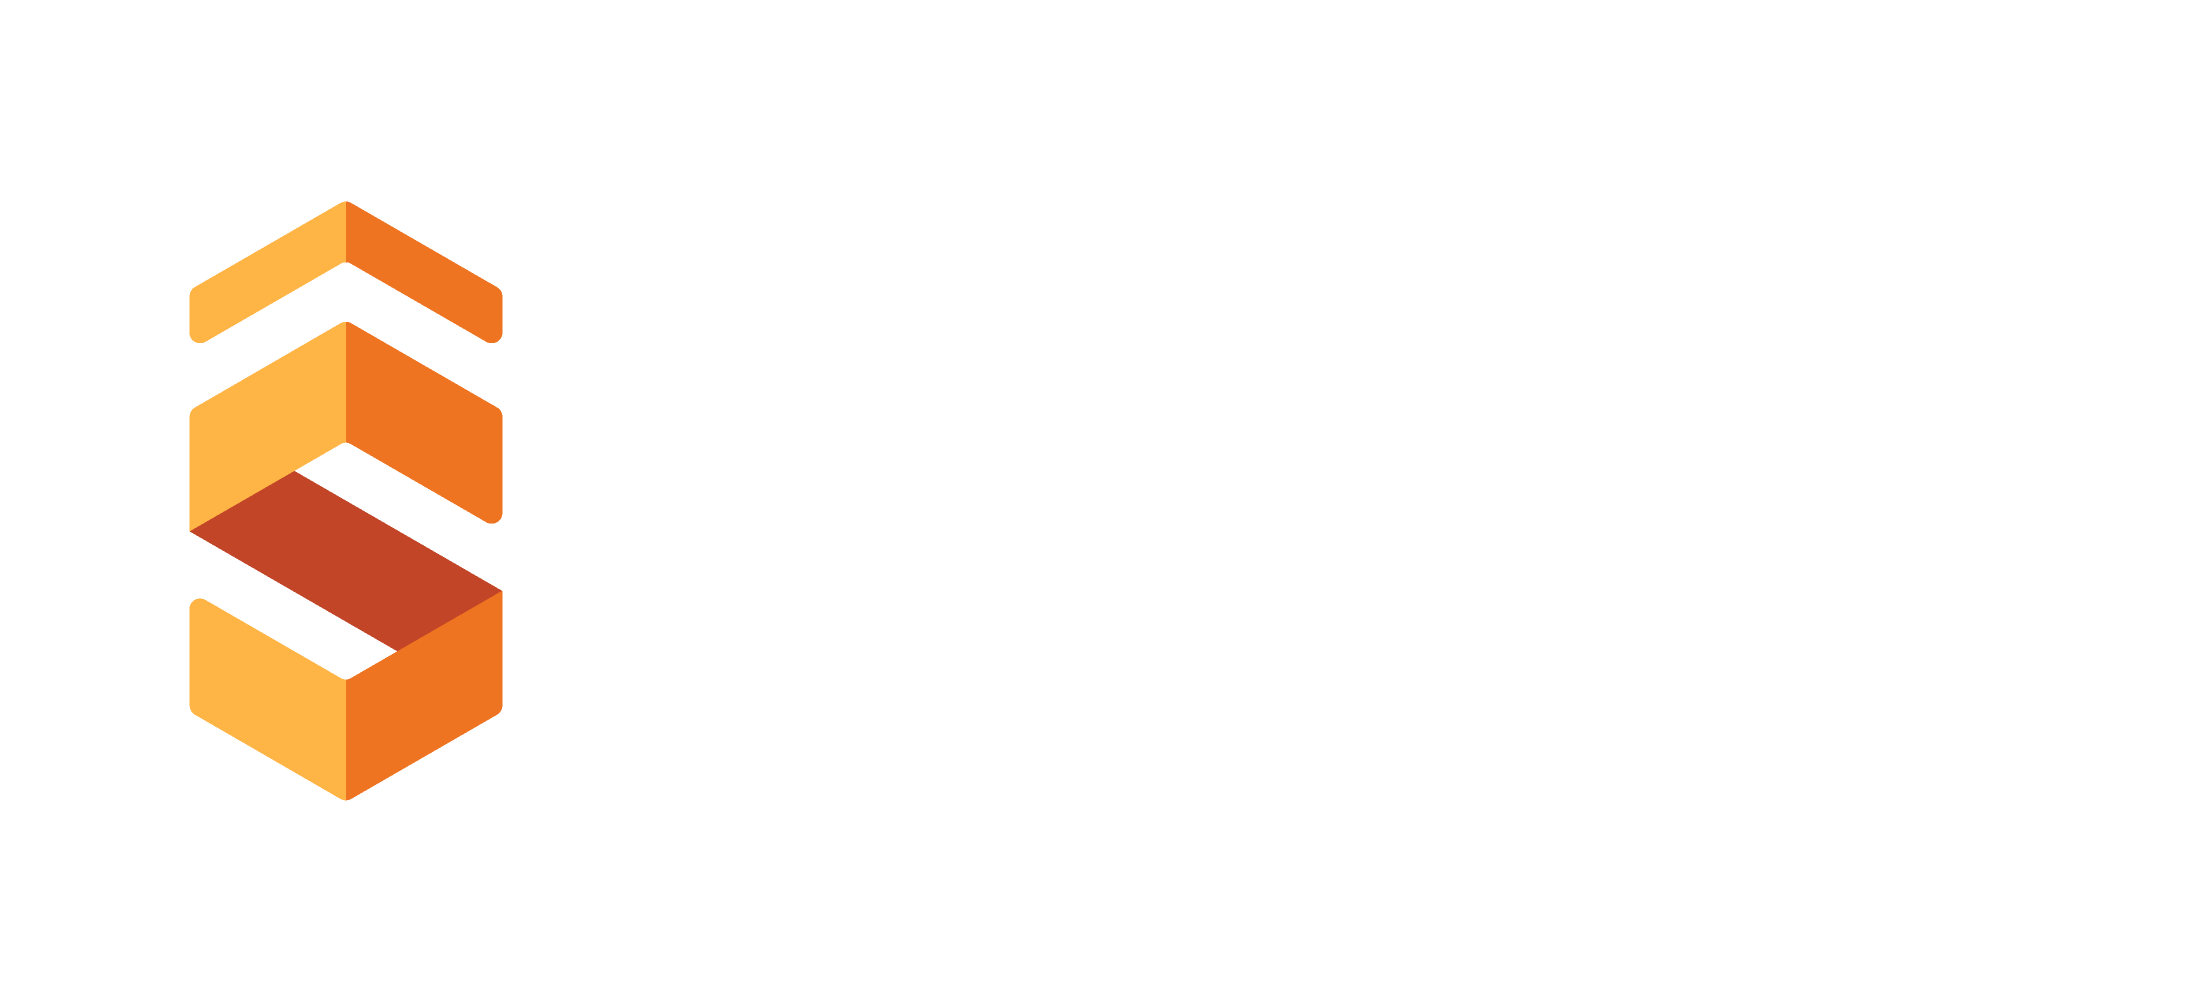 Sarepta Studio